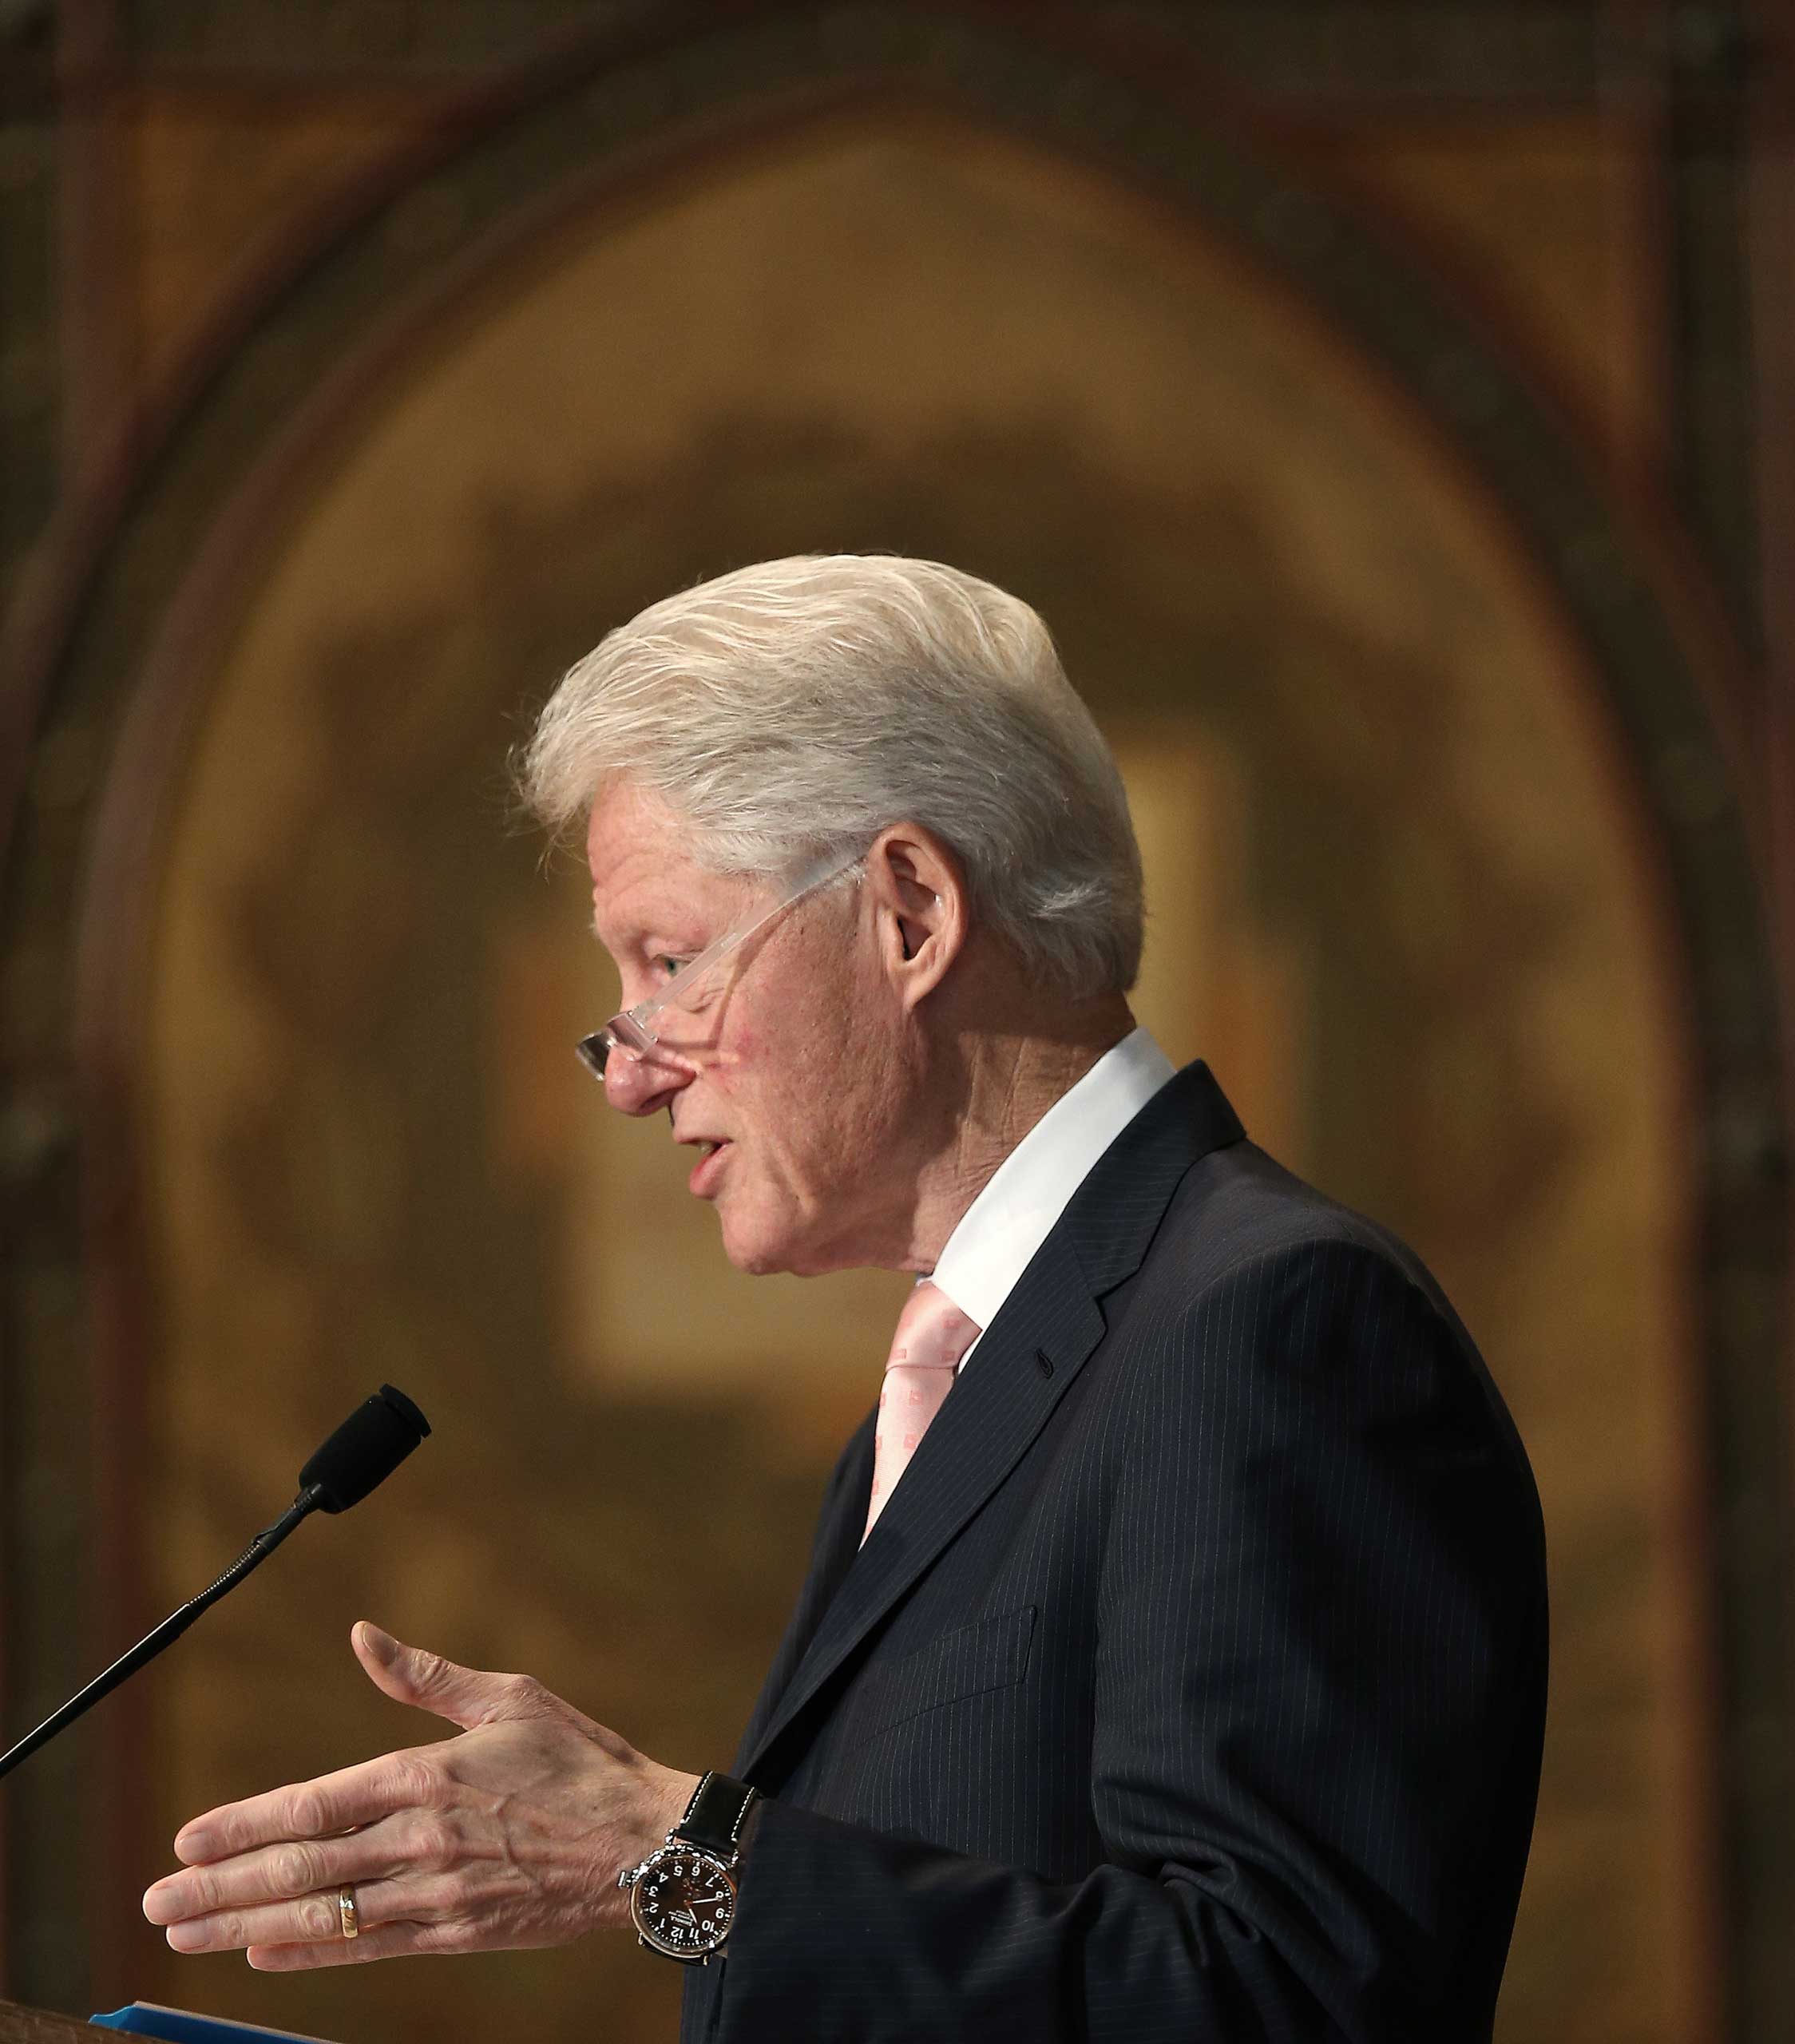 Former U.S. President Bill Clinton speaks at Georgetown University in Washington on April 21, 2015.